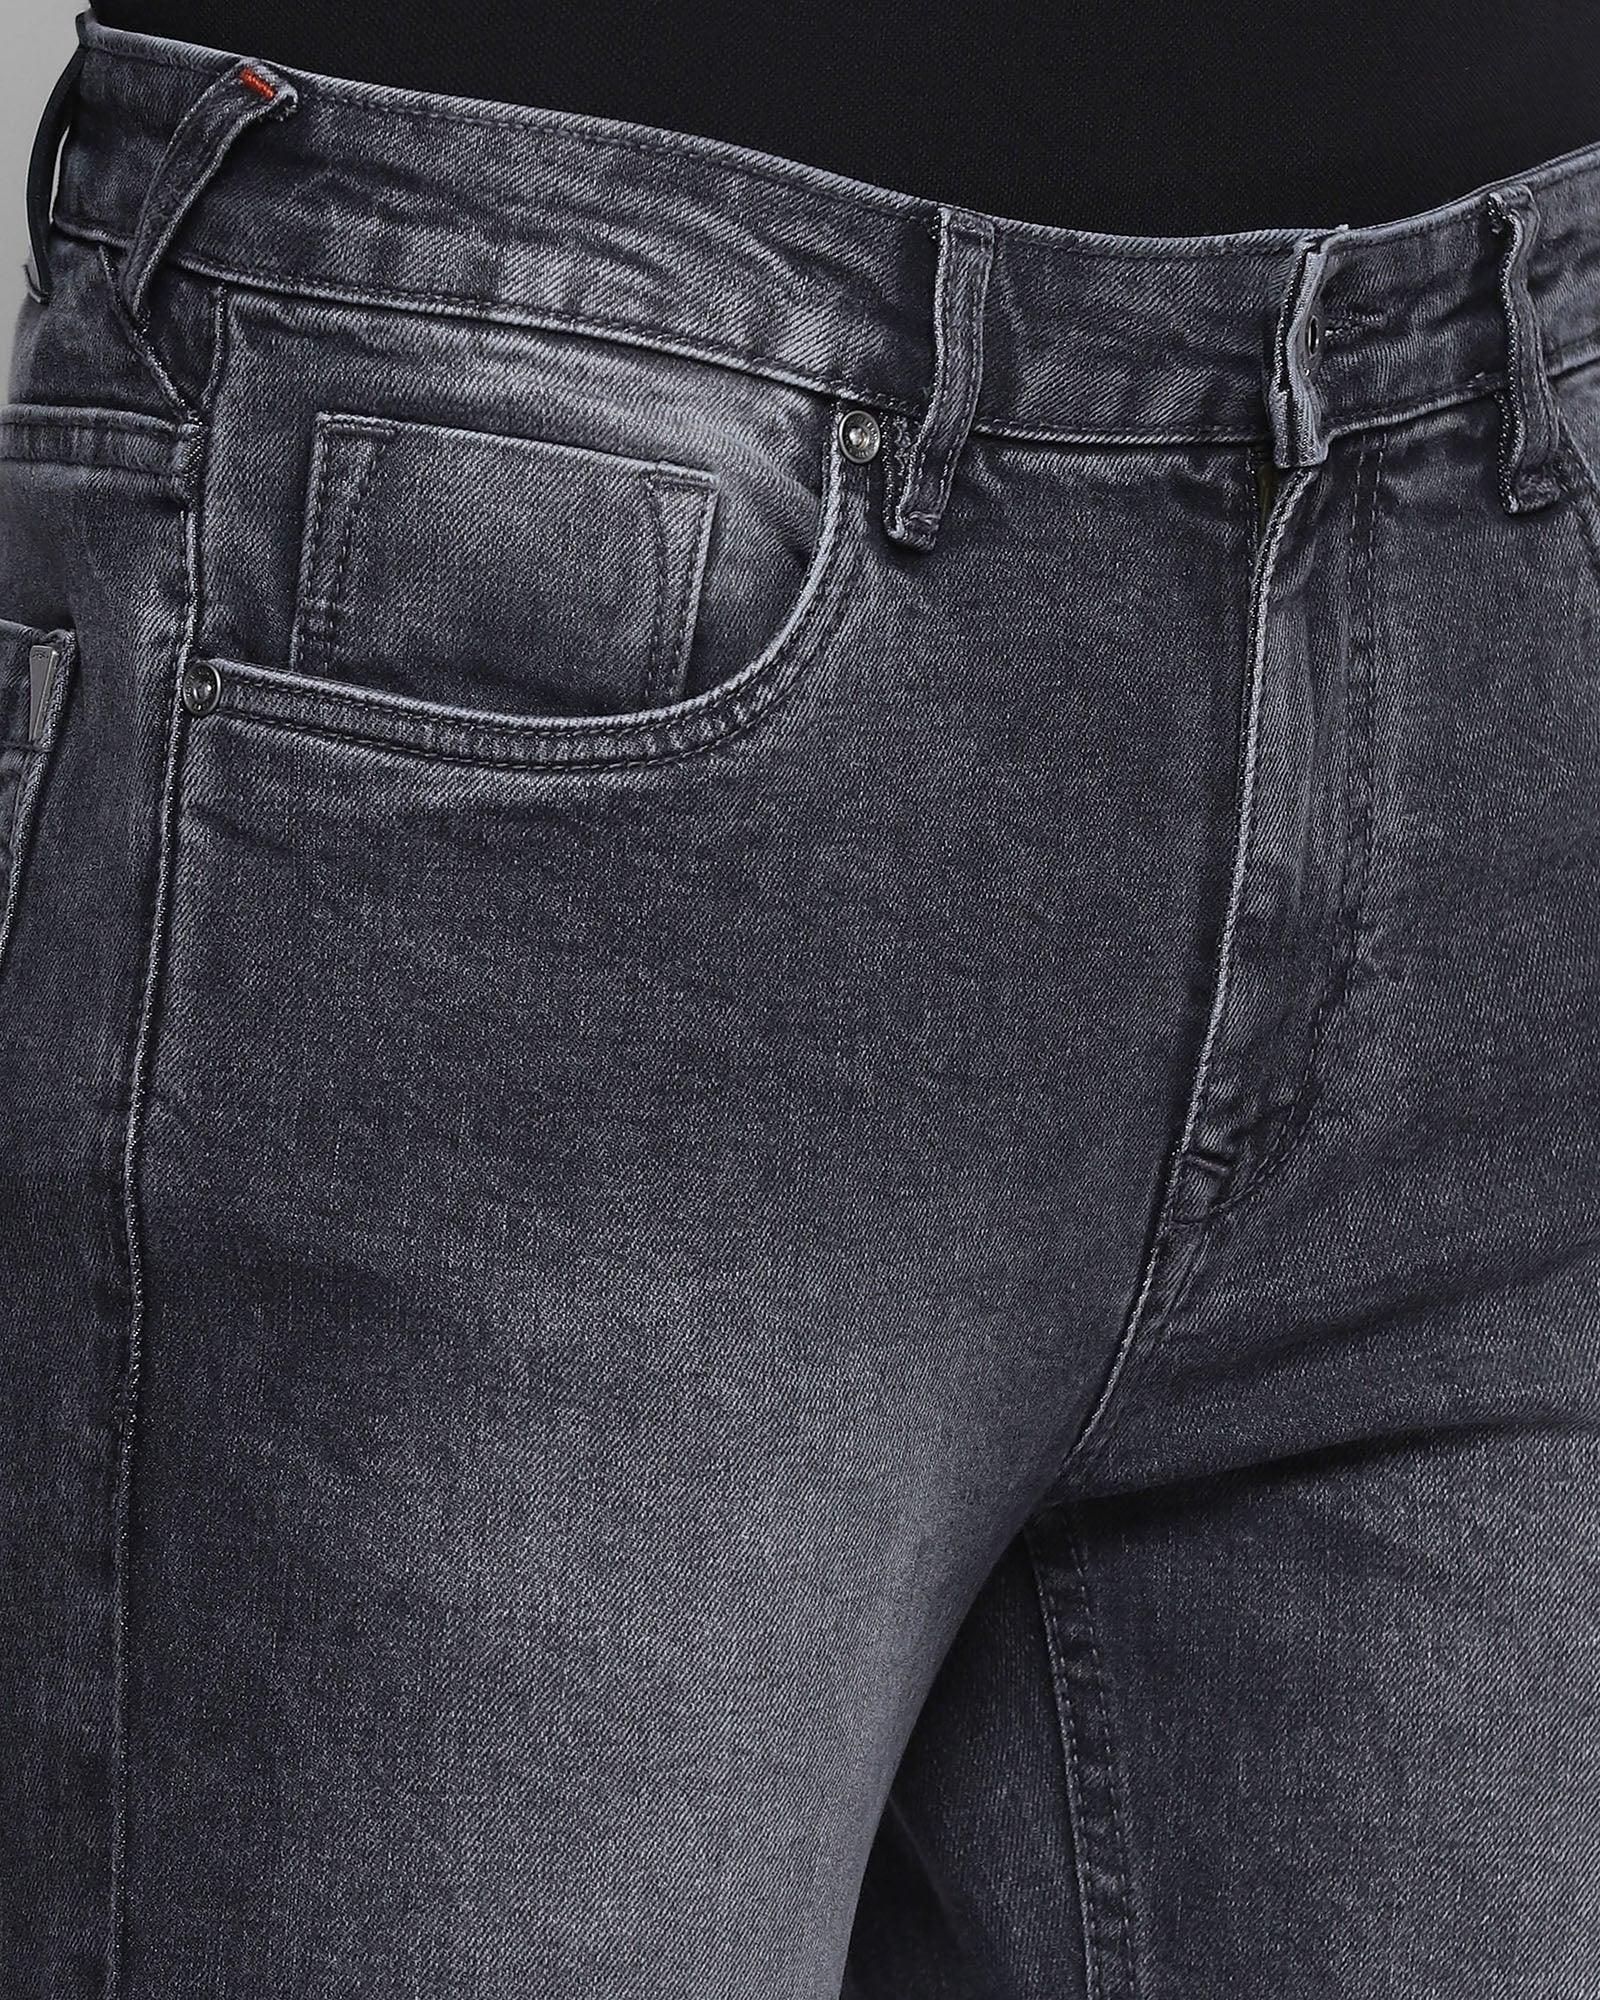 Van Heusen Men's Cotton Skinny Fit Jeans -Ash Grey, (34) : Amazon.in:  Clothing & Accessories